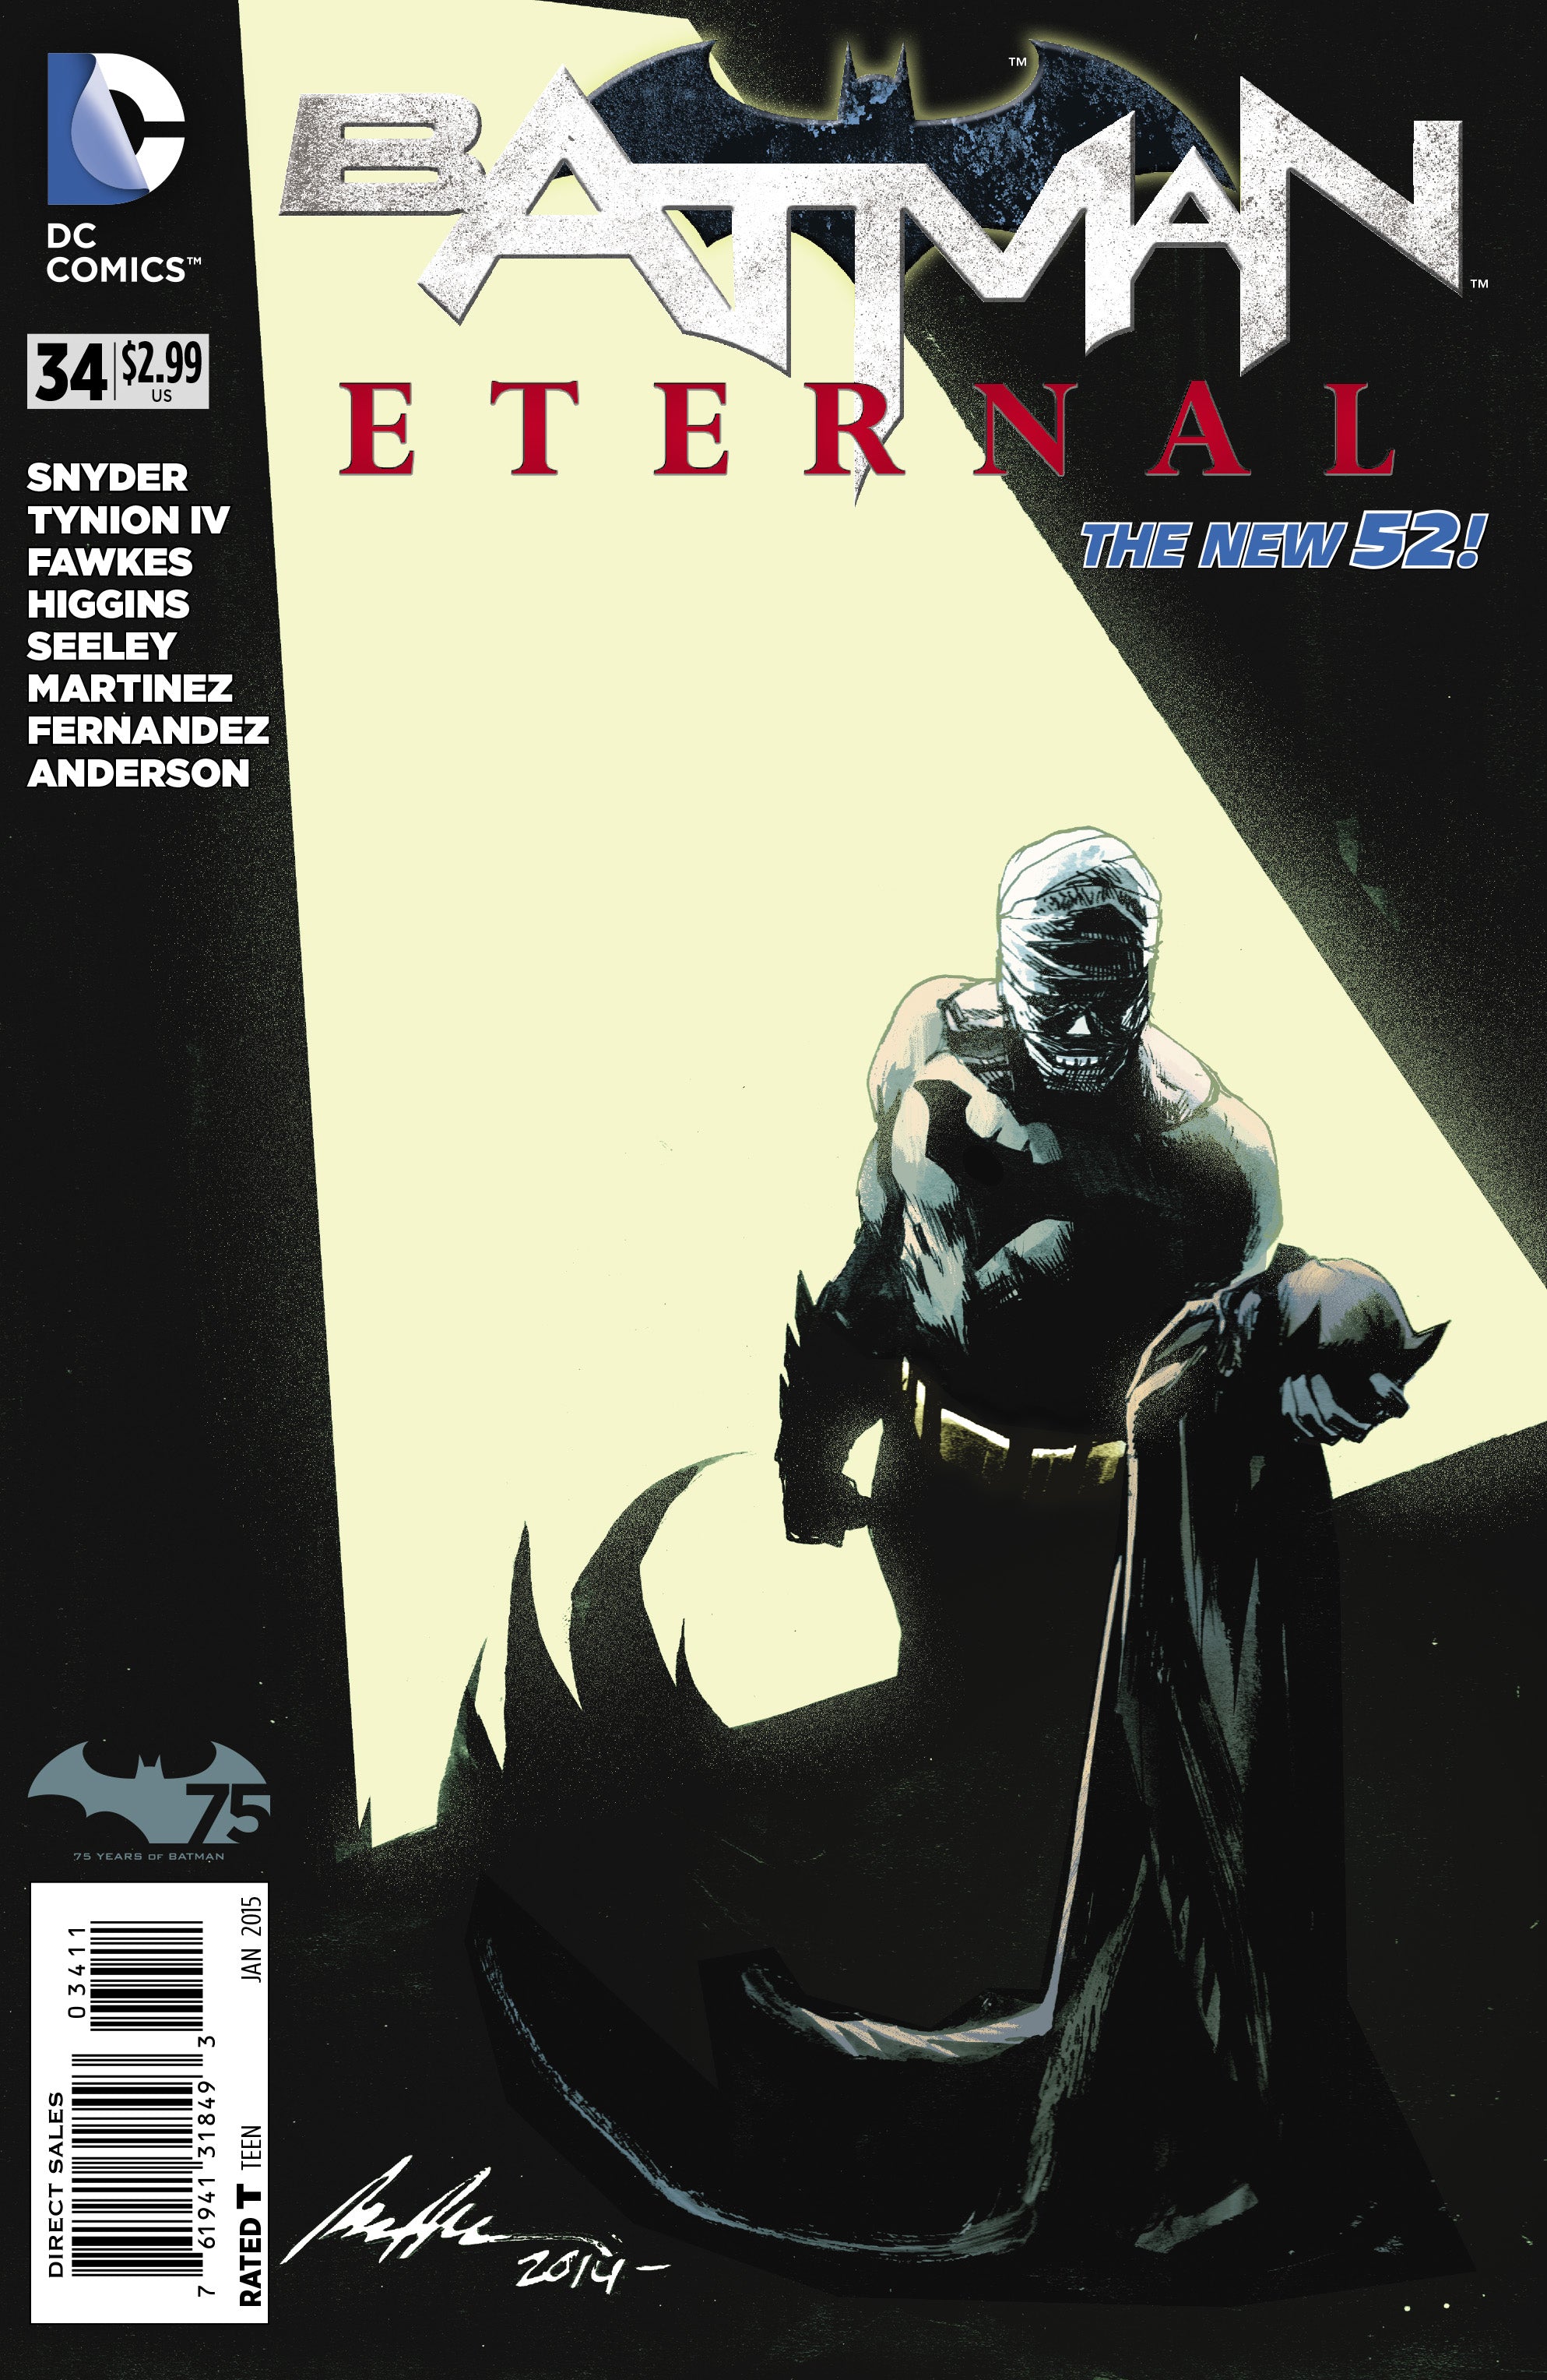 BATMAN ETERNAL #34 | Game Master's Emporium (The New GME)